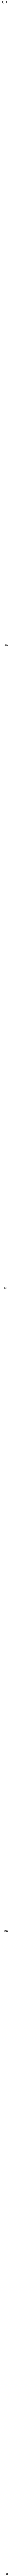 Cobalt lithium manganese nickel oxide (Co0.2LiMn0.3Ni0.5O2) Structure